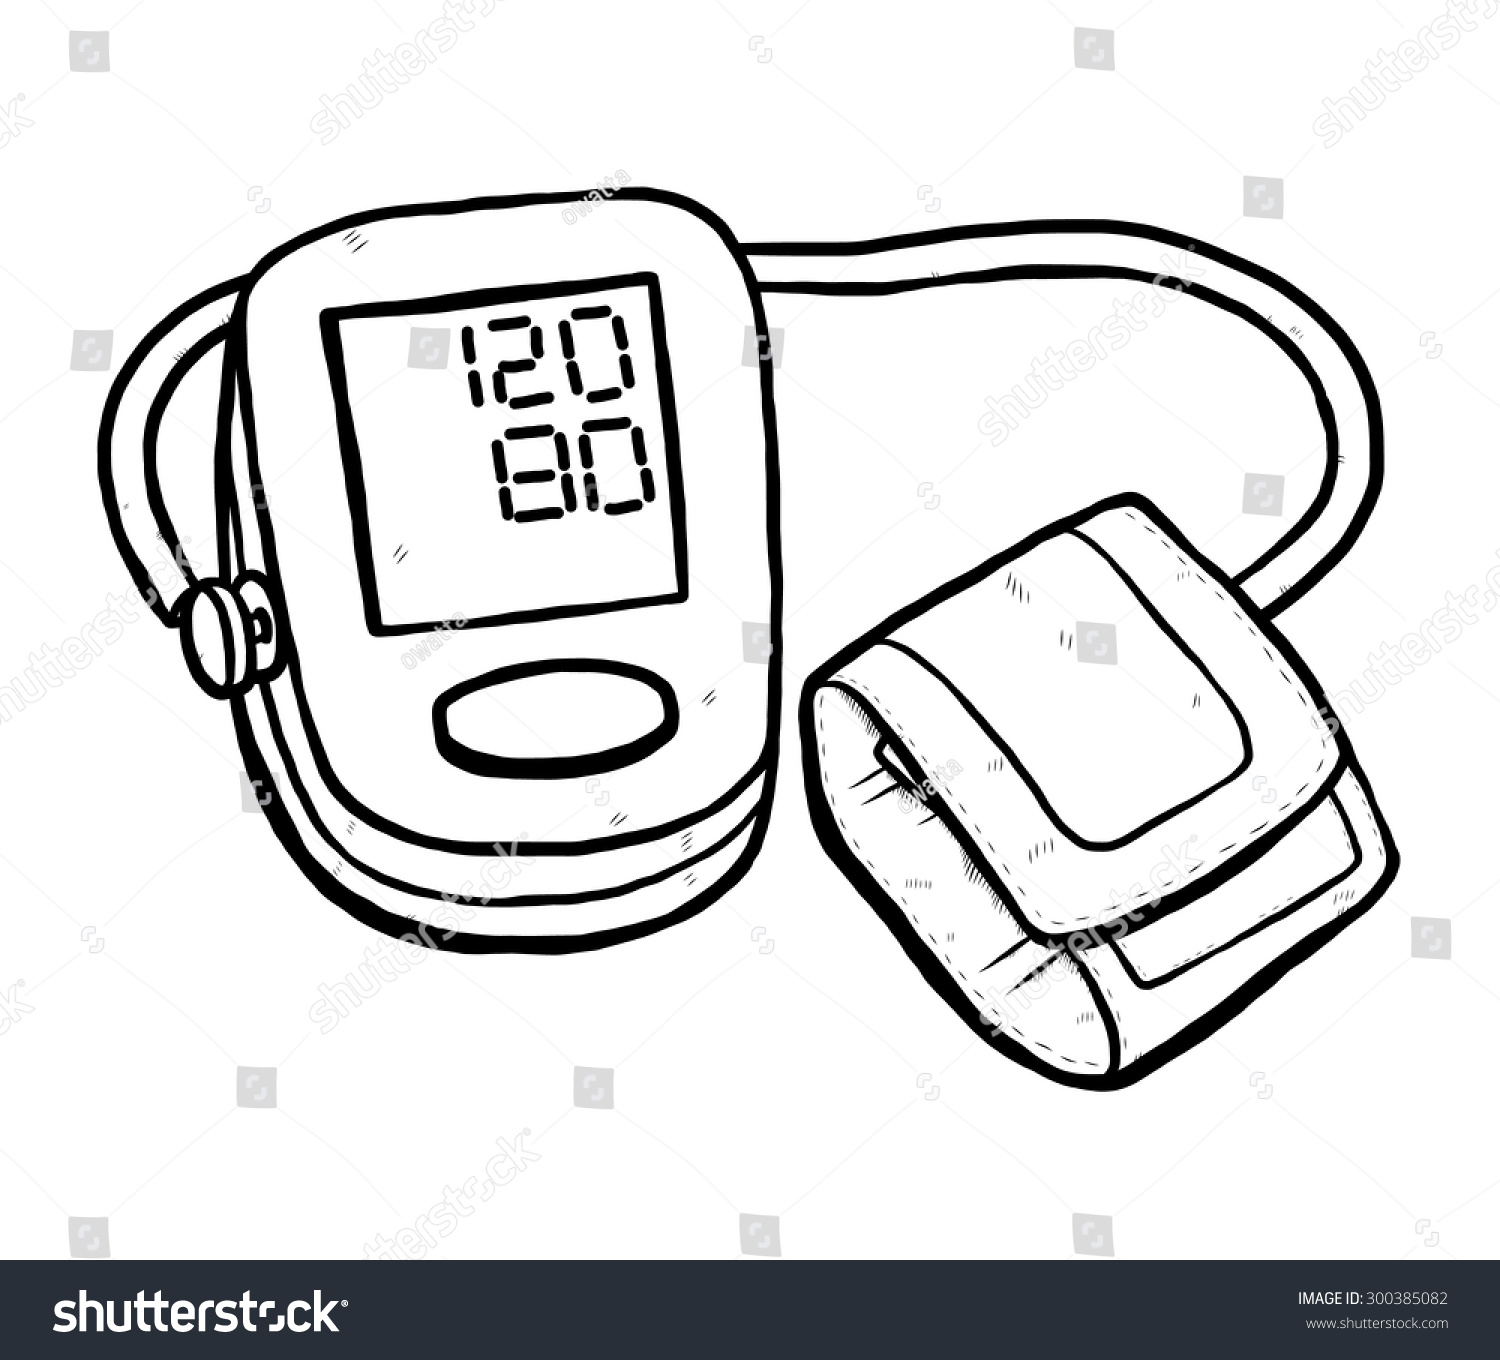 clipart blood pressure machine - photo #12